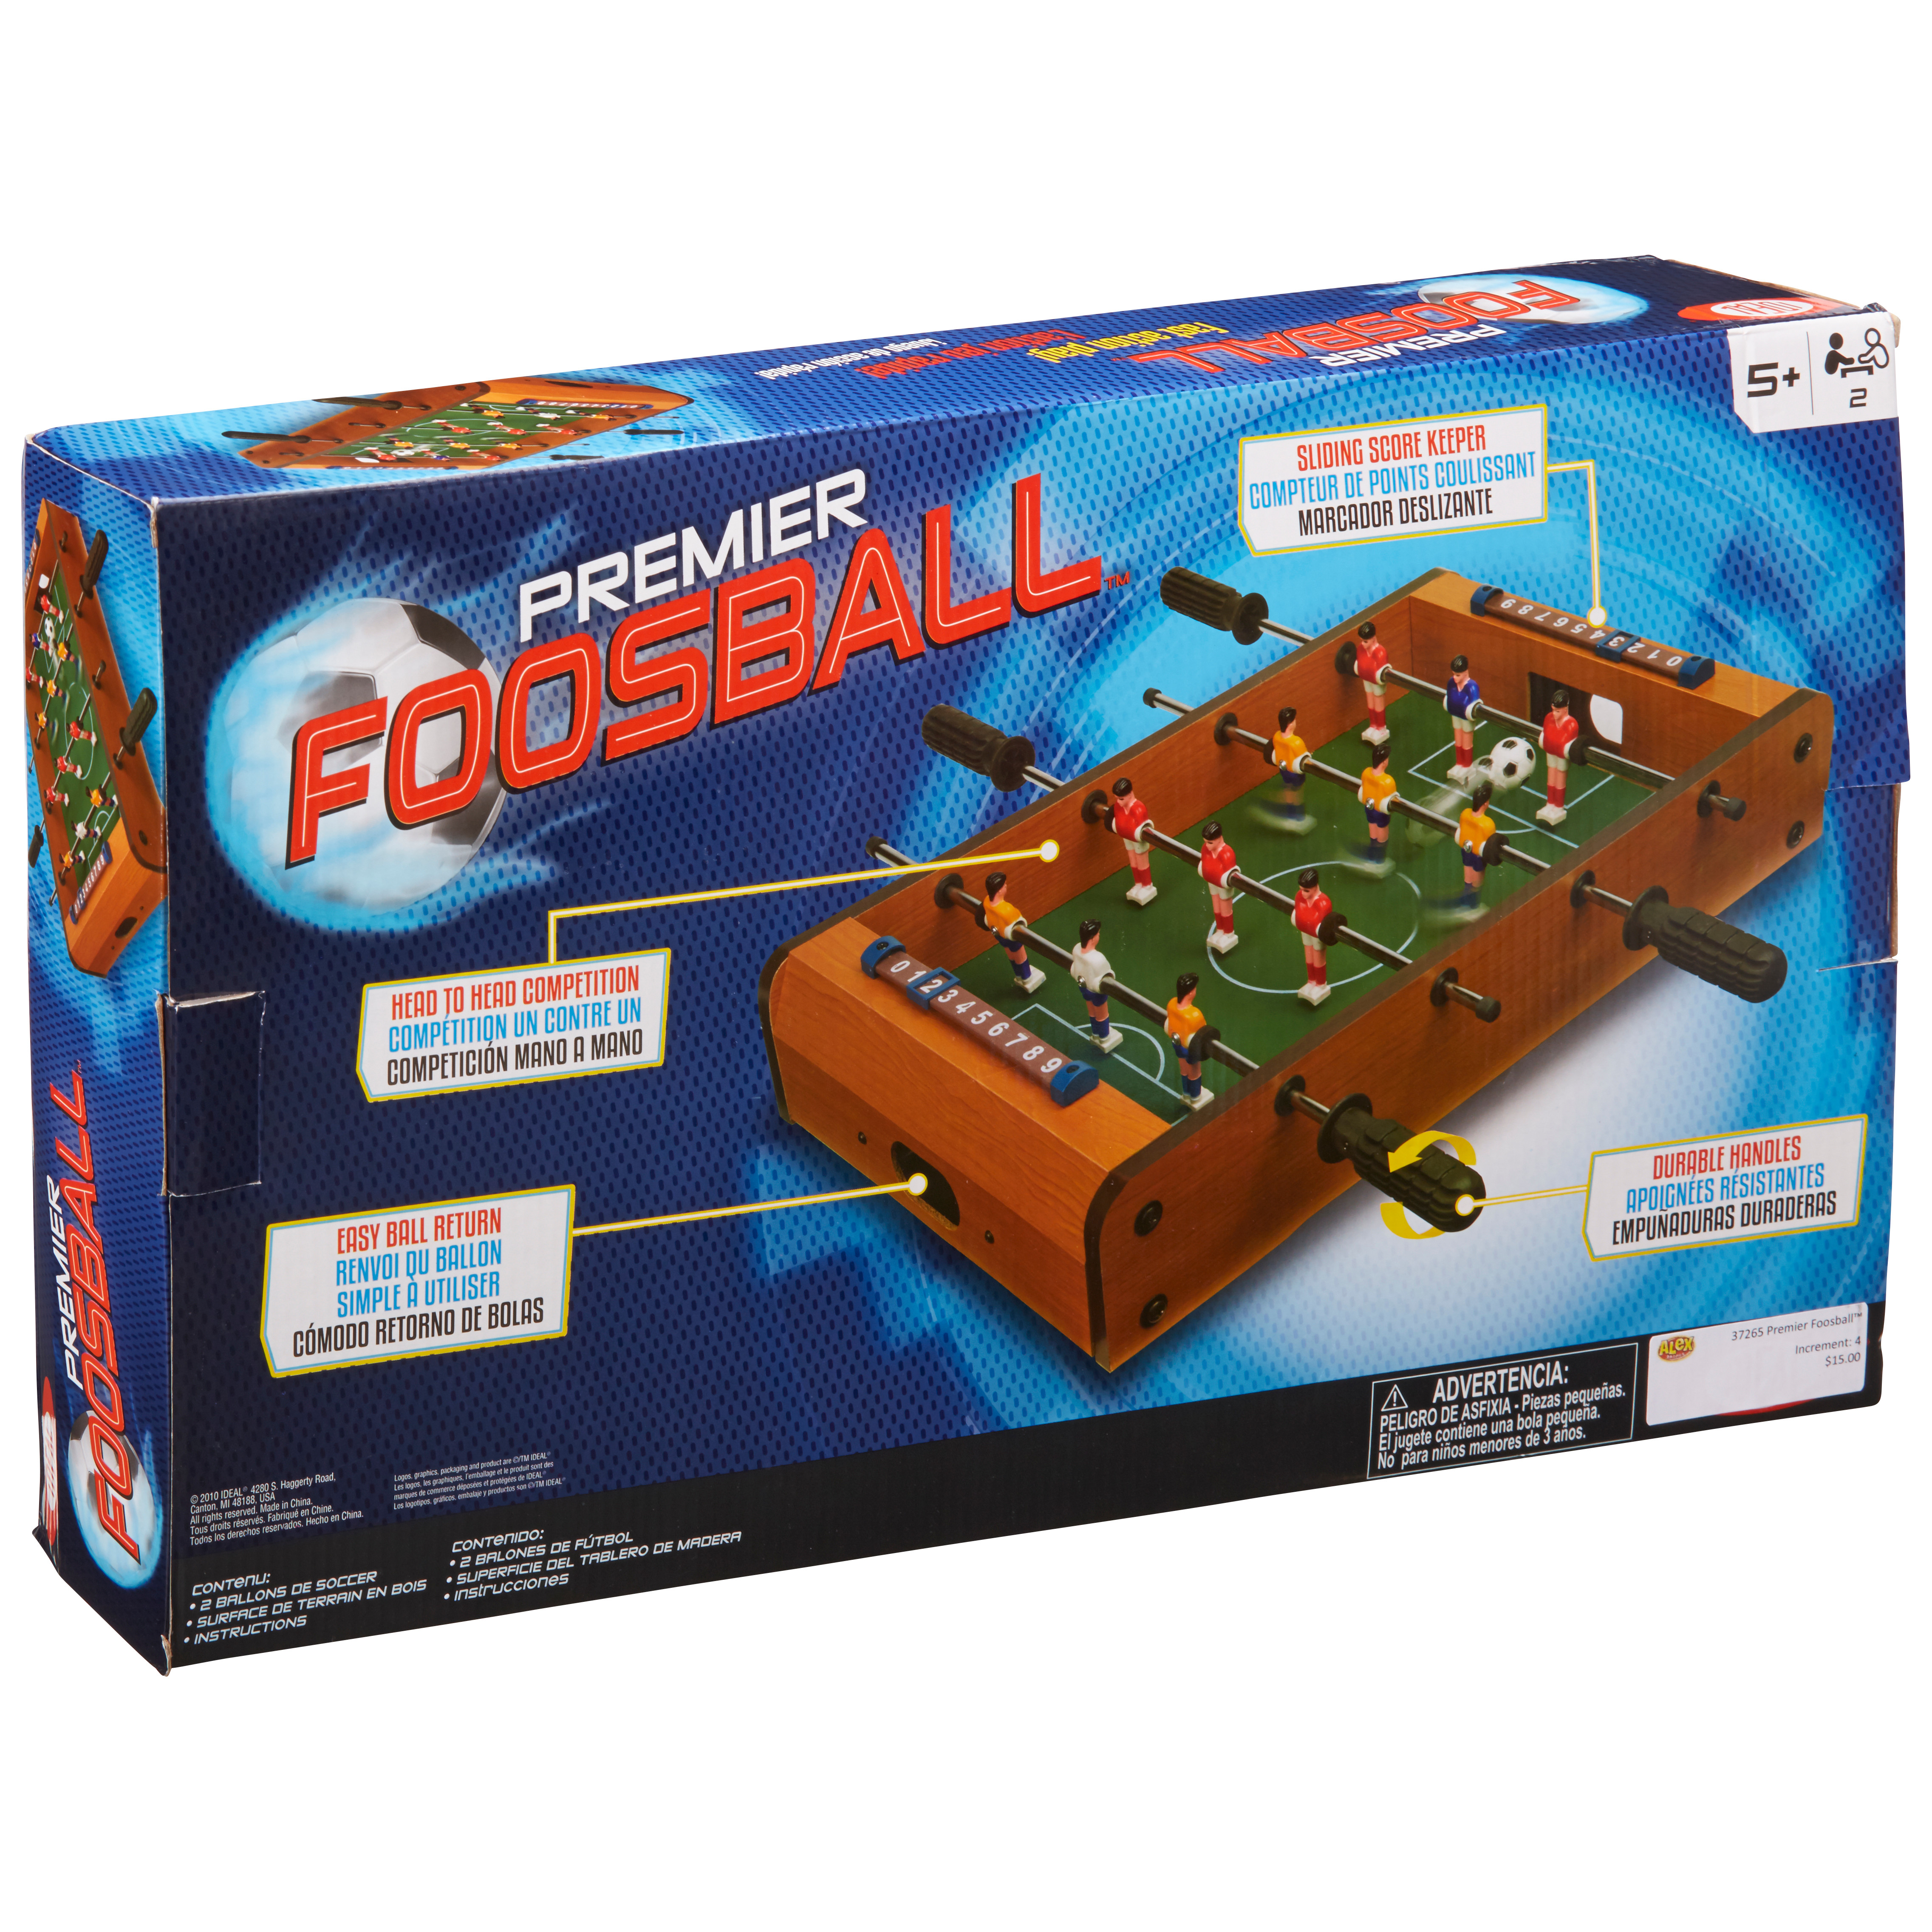 Ideal Premier Foosball Tabletop Game - image 3 of 4